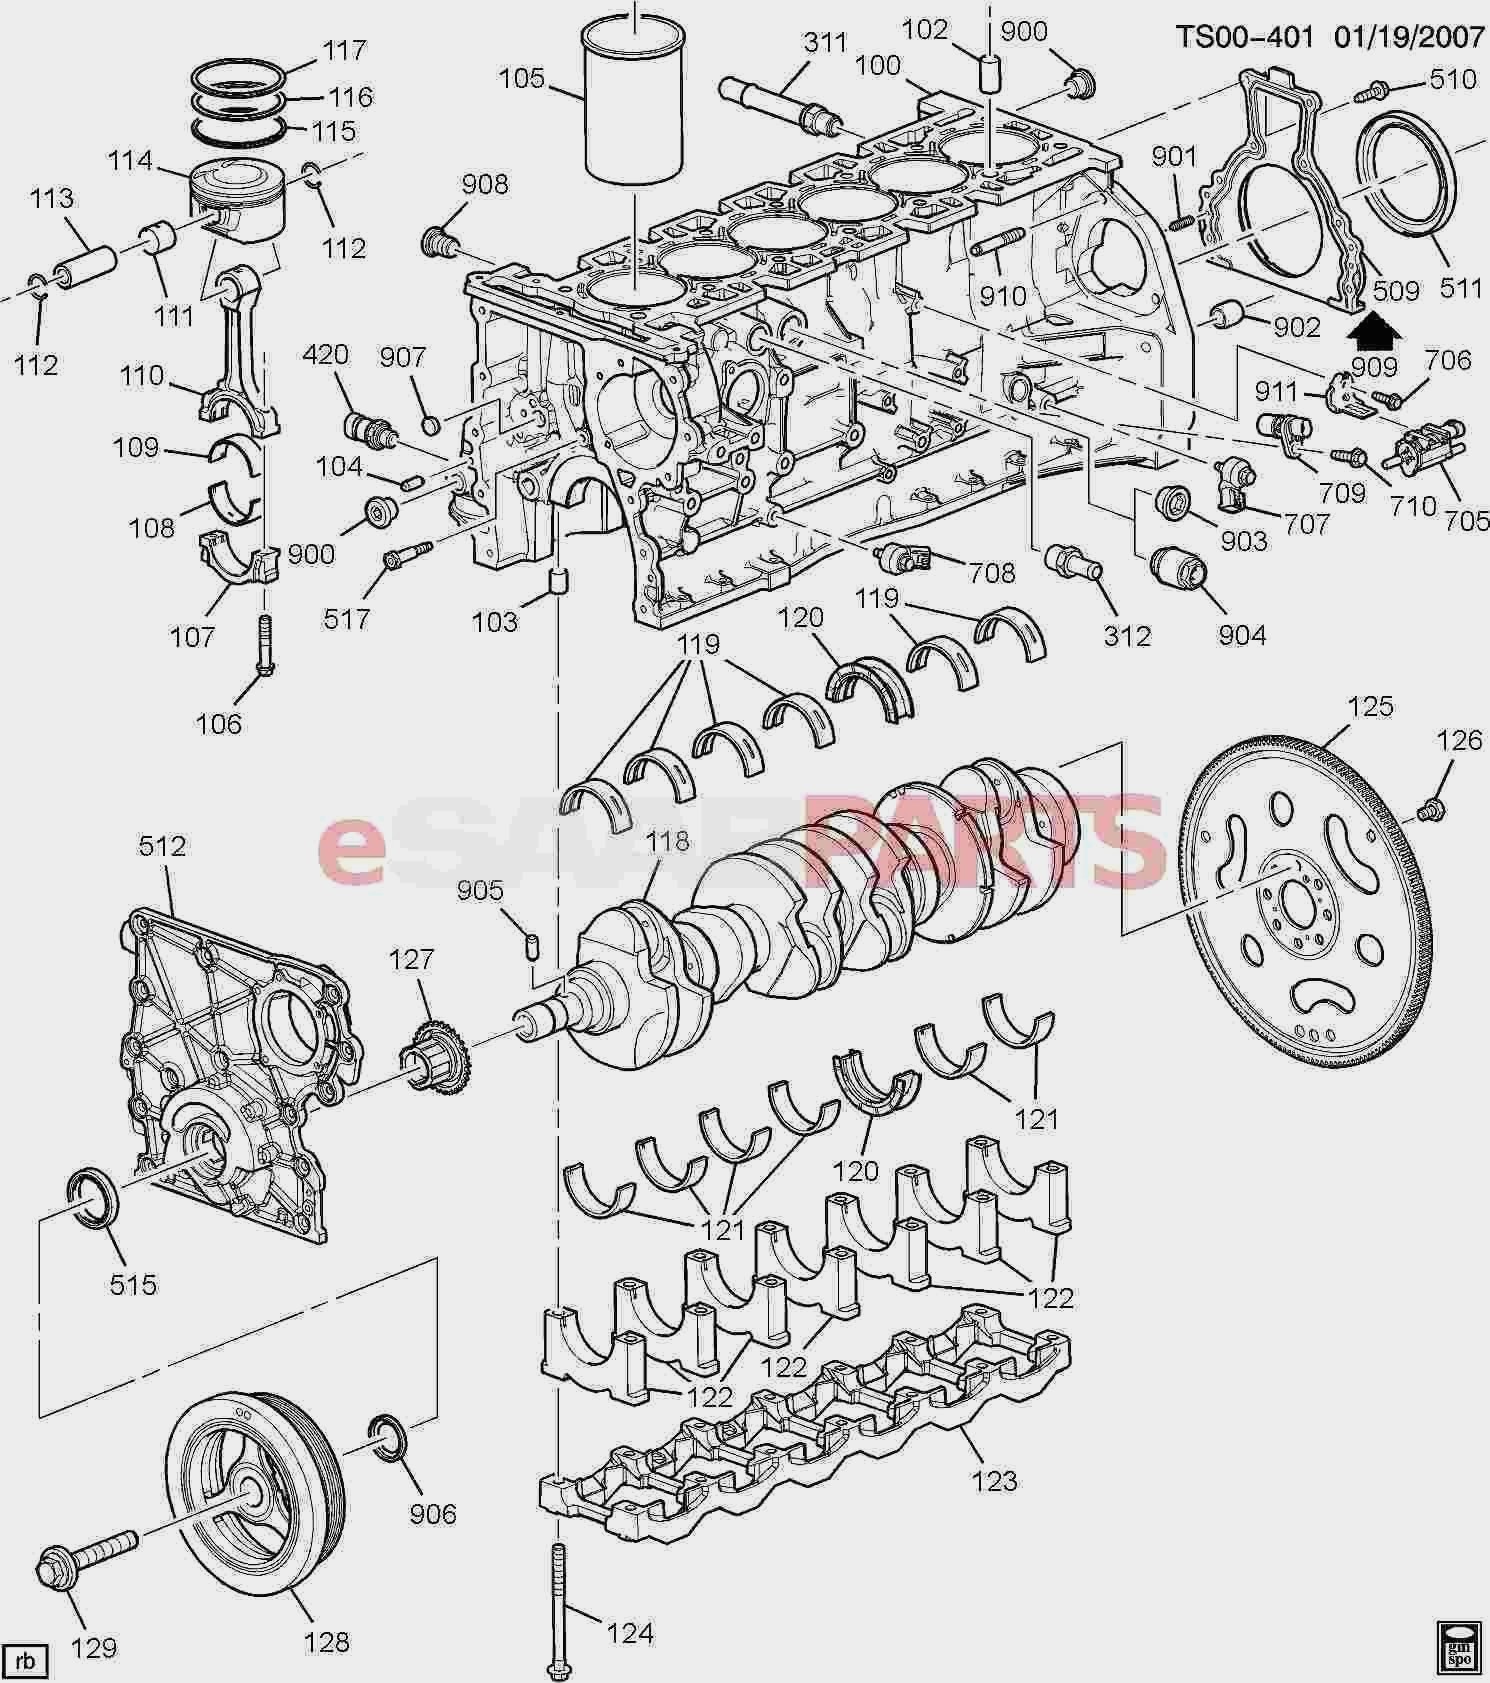 Labelled Diagram Of Car Parts Saab Usa Parts Of Labelled Diagram Of Car Parts